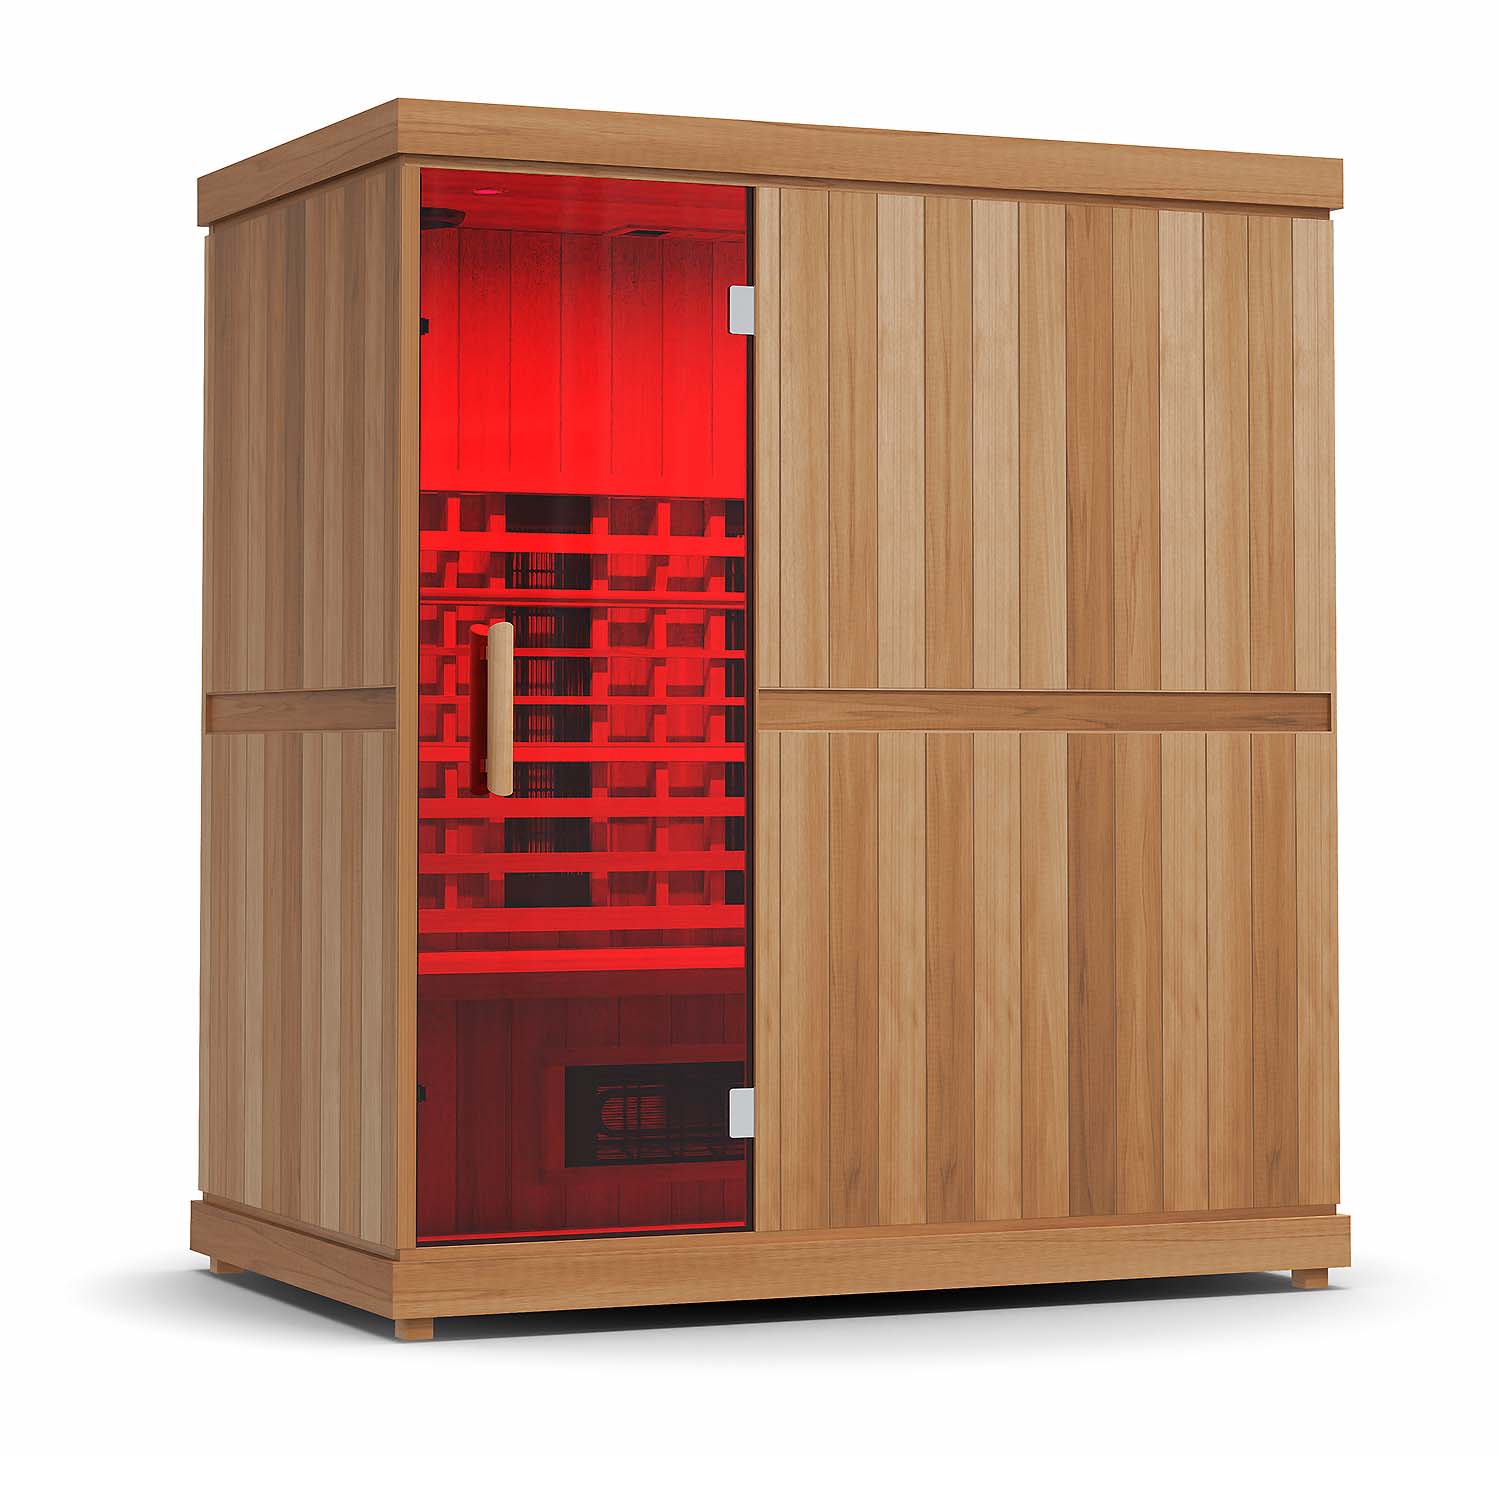 Finnmark Designs 3-4 Person Full Spectrum Infrared Sauna | FD-3